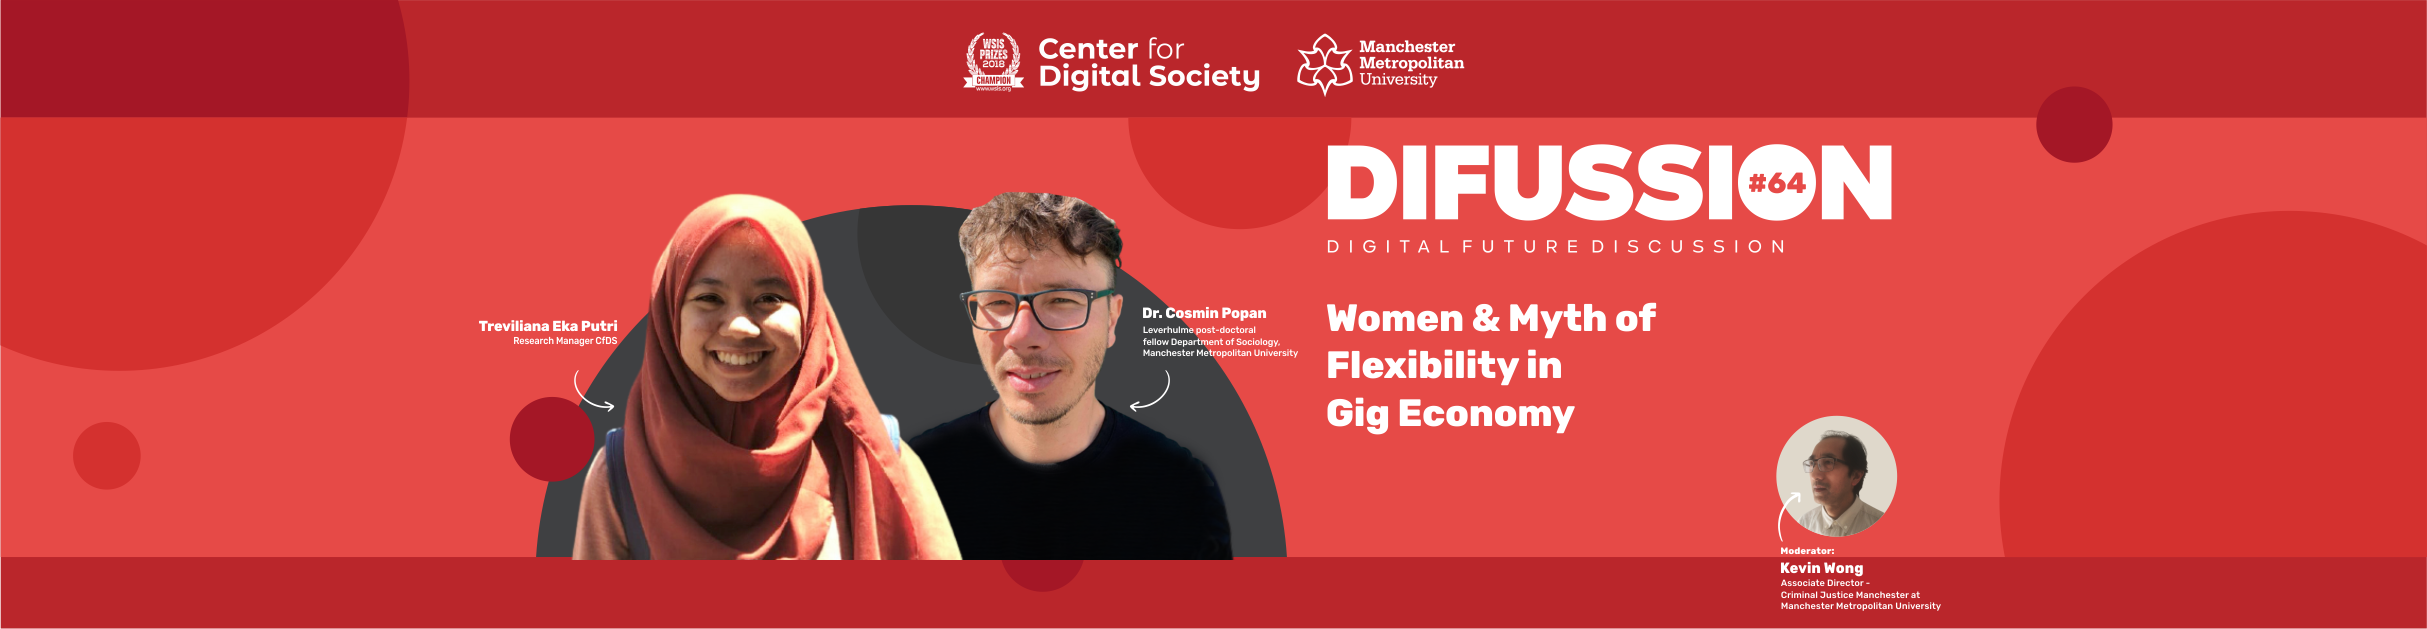 [PRESS RELEASE] Women & Myth of Flexibility in Gig Economy | #DIFUSSION64